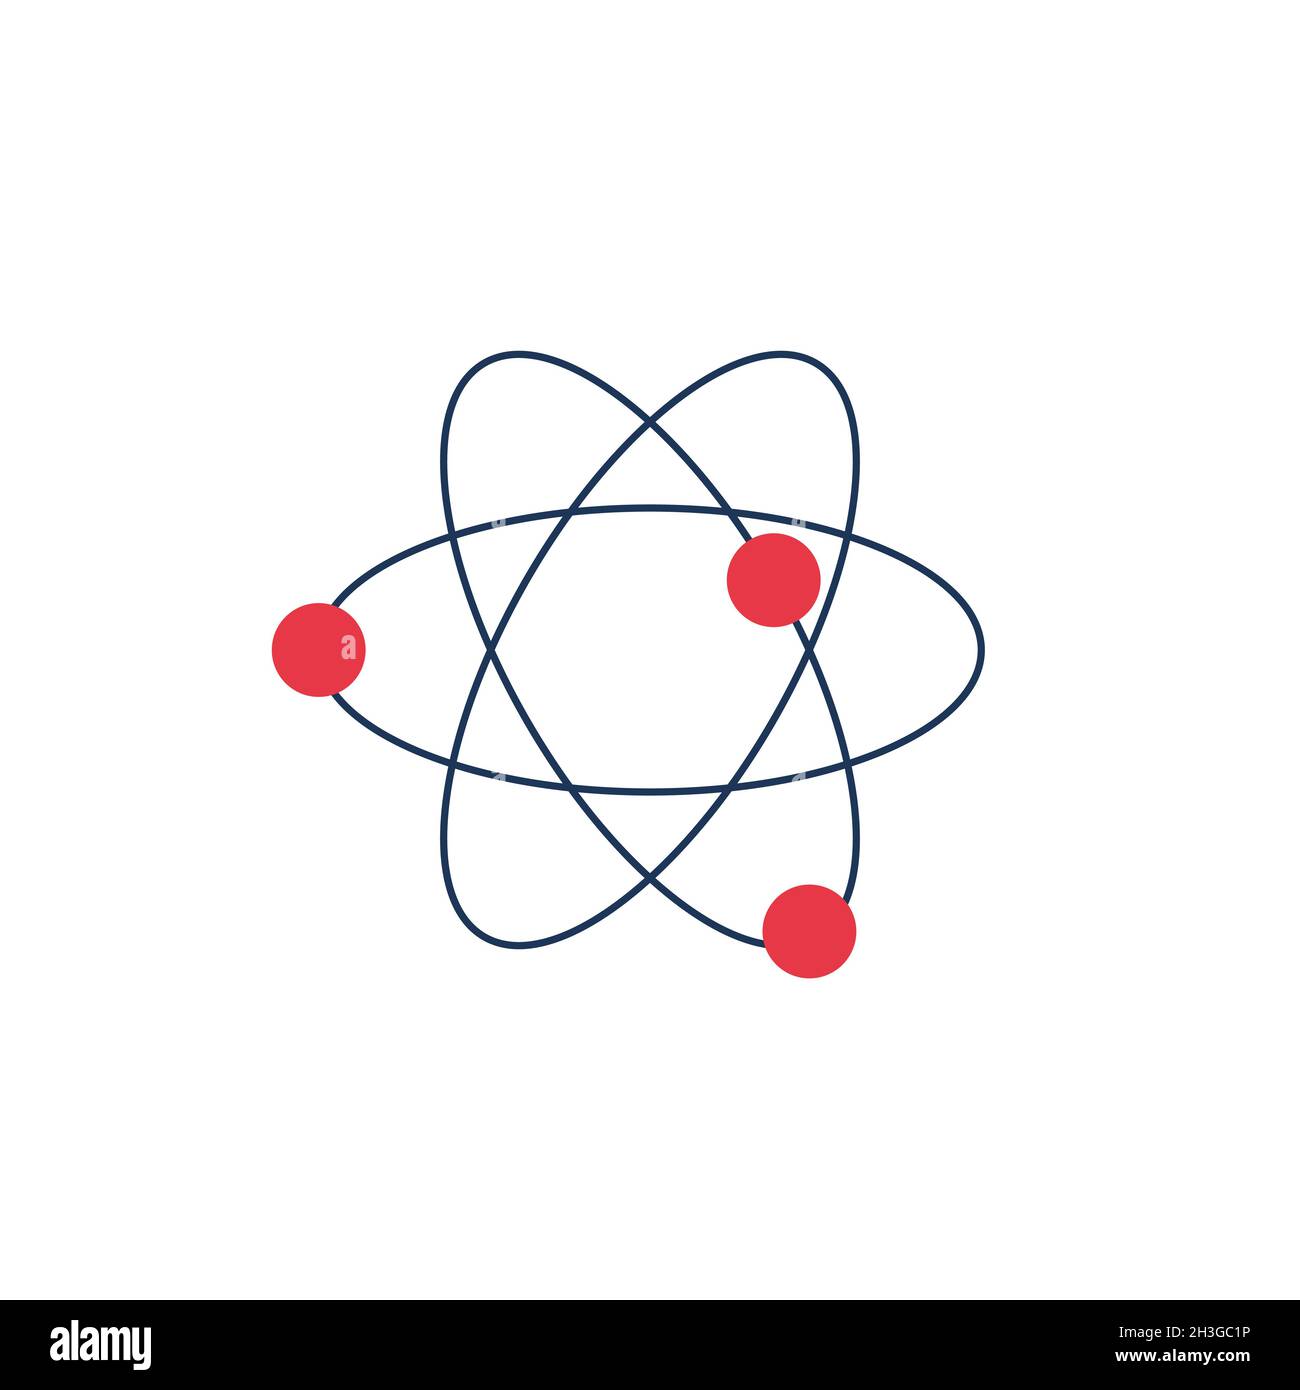 Atom icon, science symbol modern minimal flat design style. Vector illustration. Stock Vector illustration isolated on white background. Stock Vector